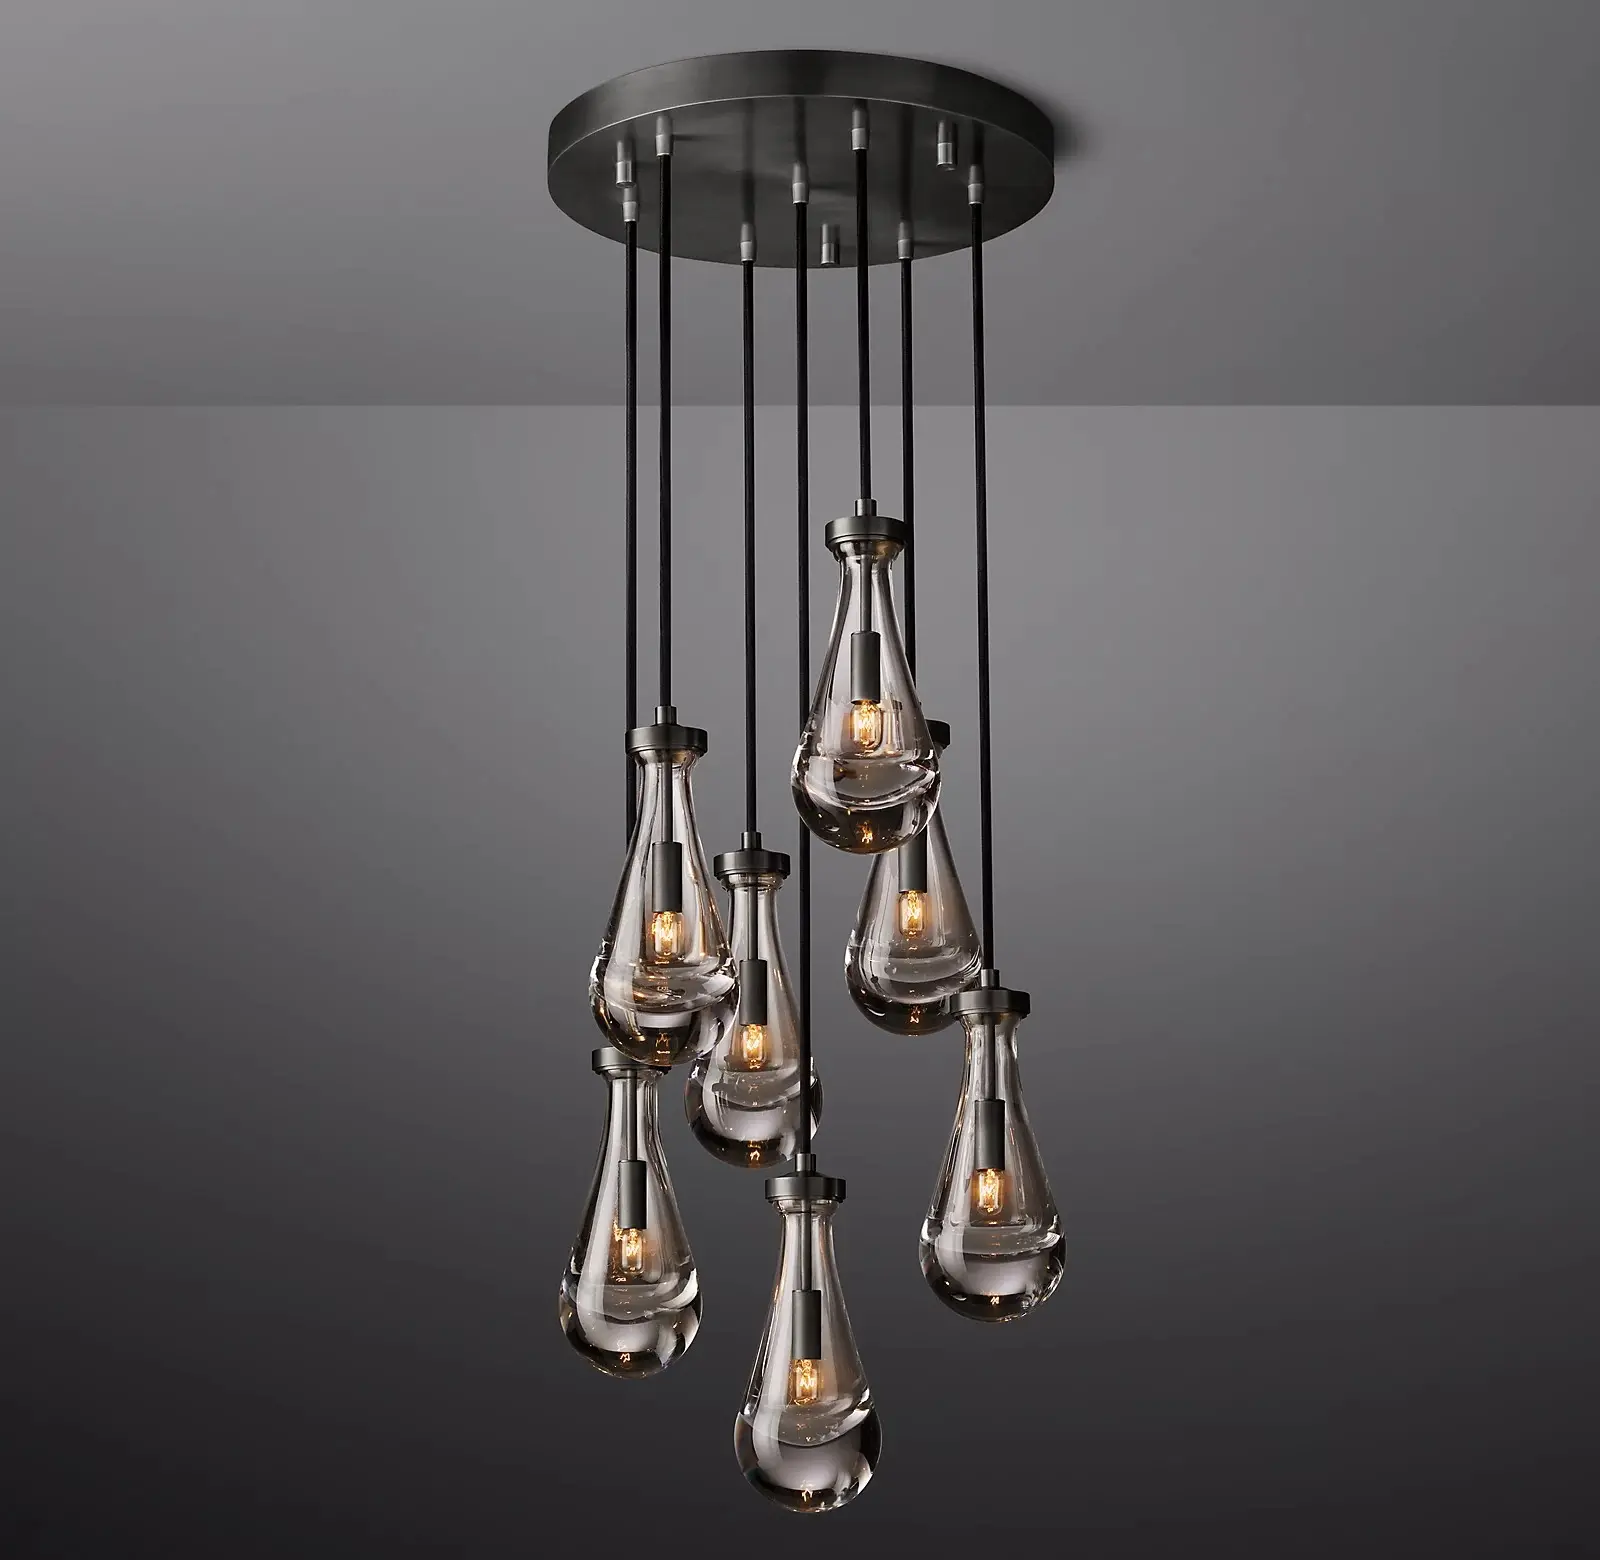 2022 Modern Luxury Ceiling Light Indoor Lighting Fixtures Led Pendant Lighting Crystal Chandelier